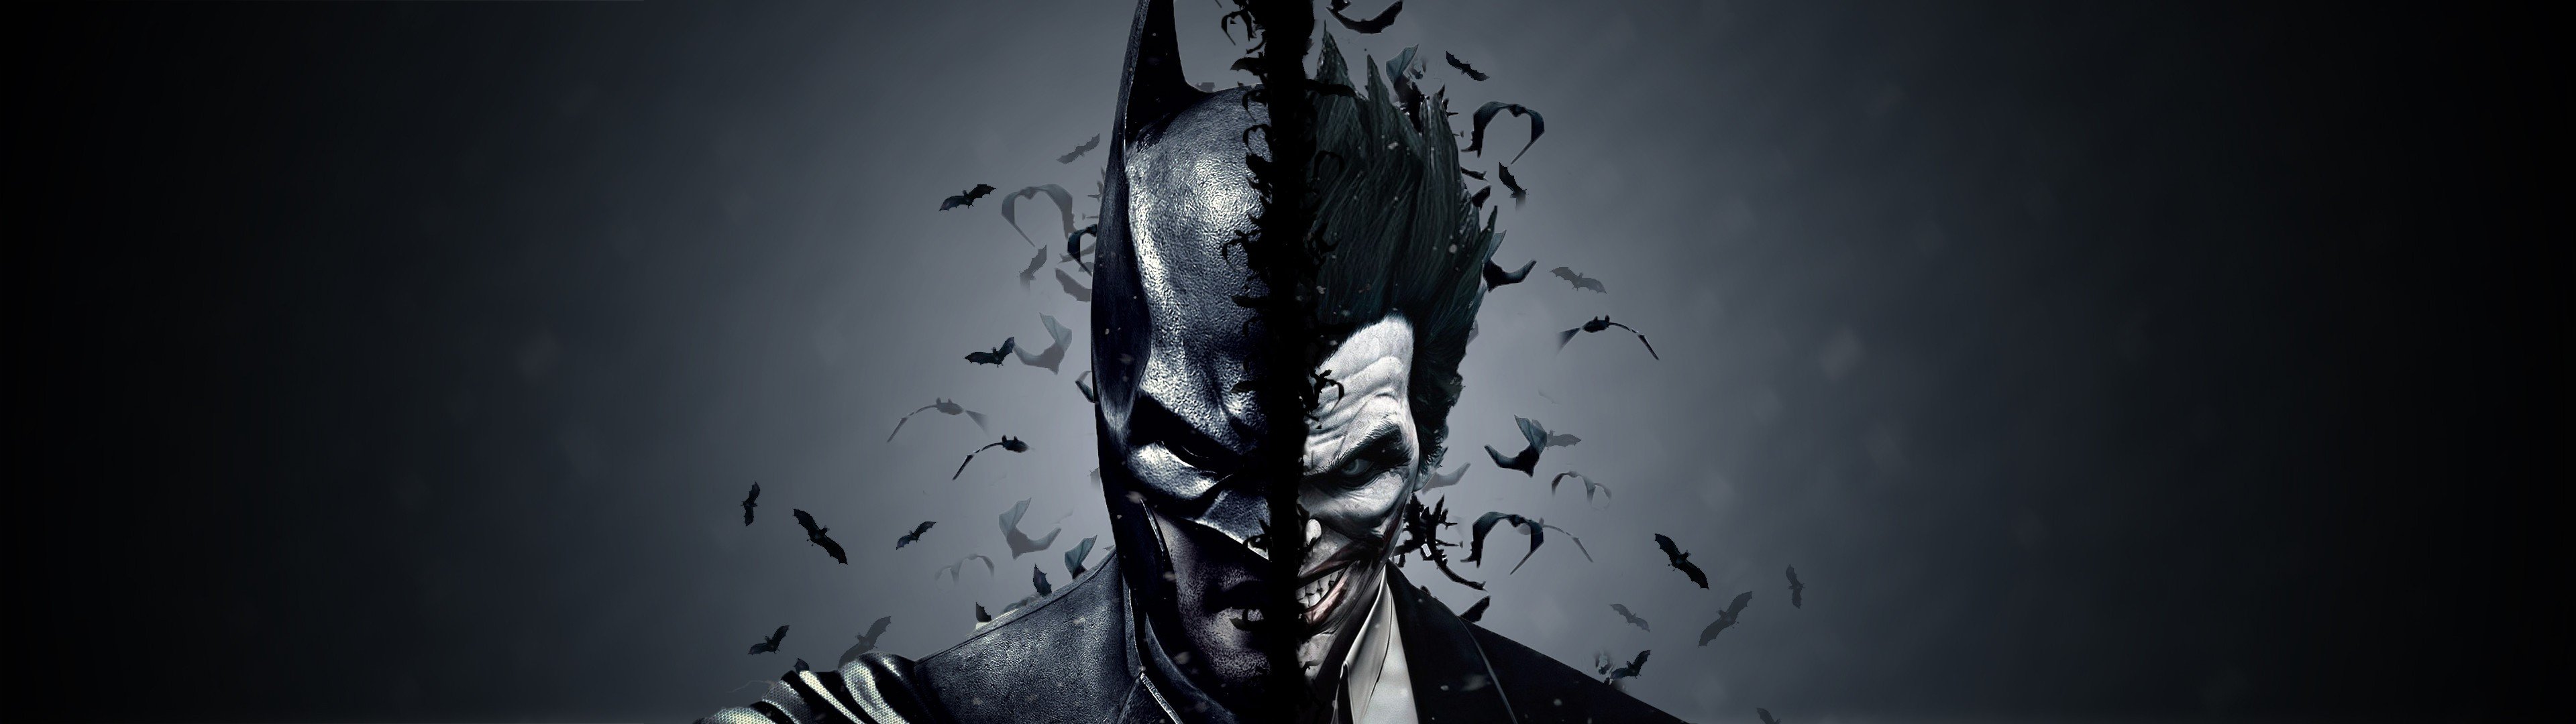 Batman Joker Dual Monitor - HD Wallpaper 